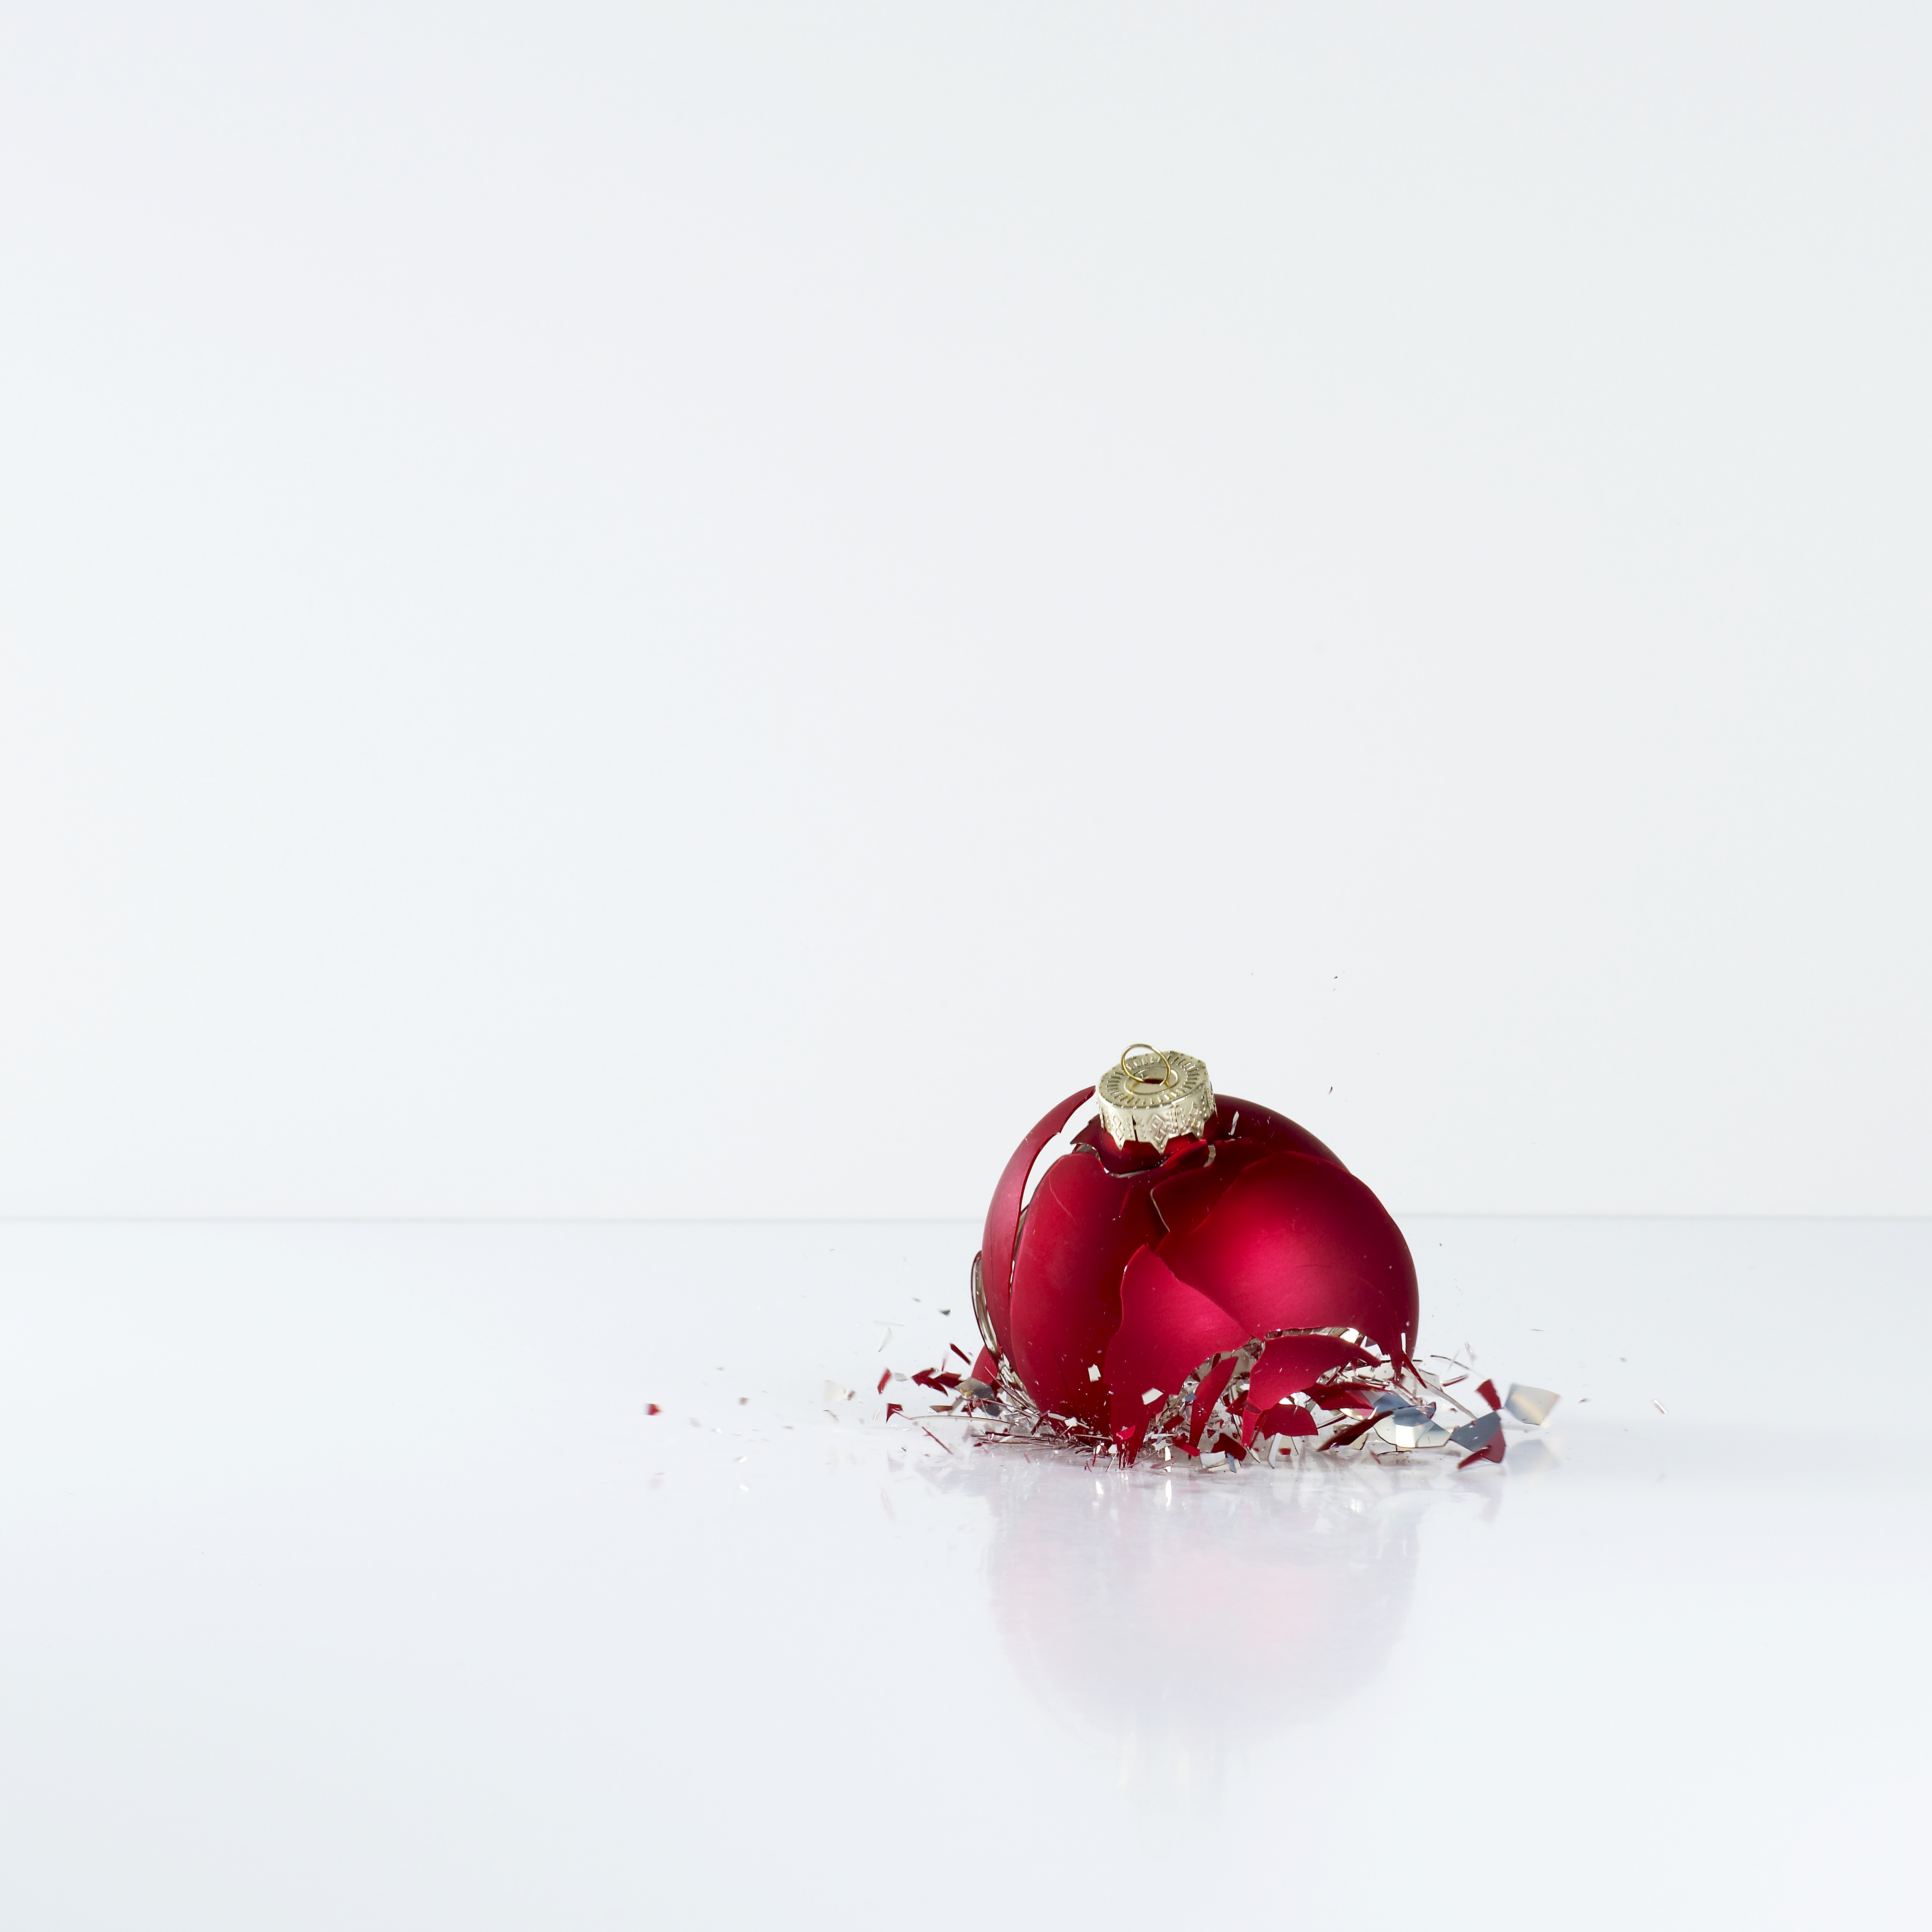 Christmas tree ball falling